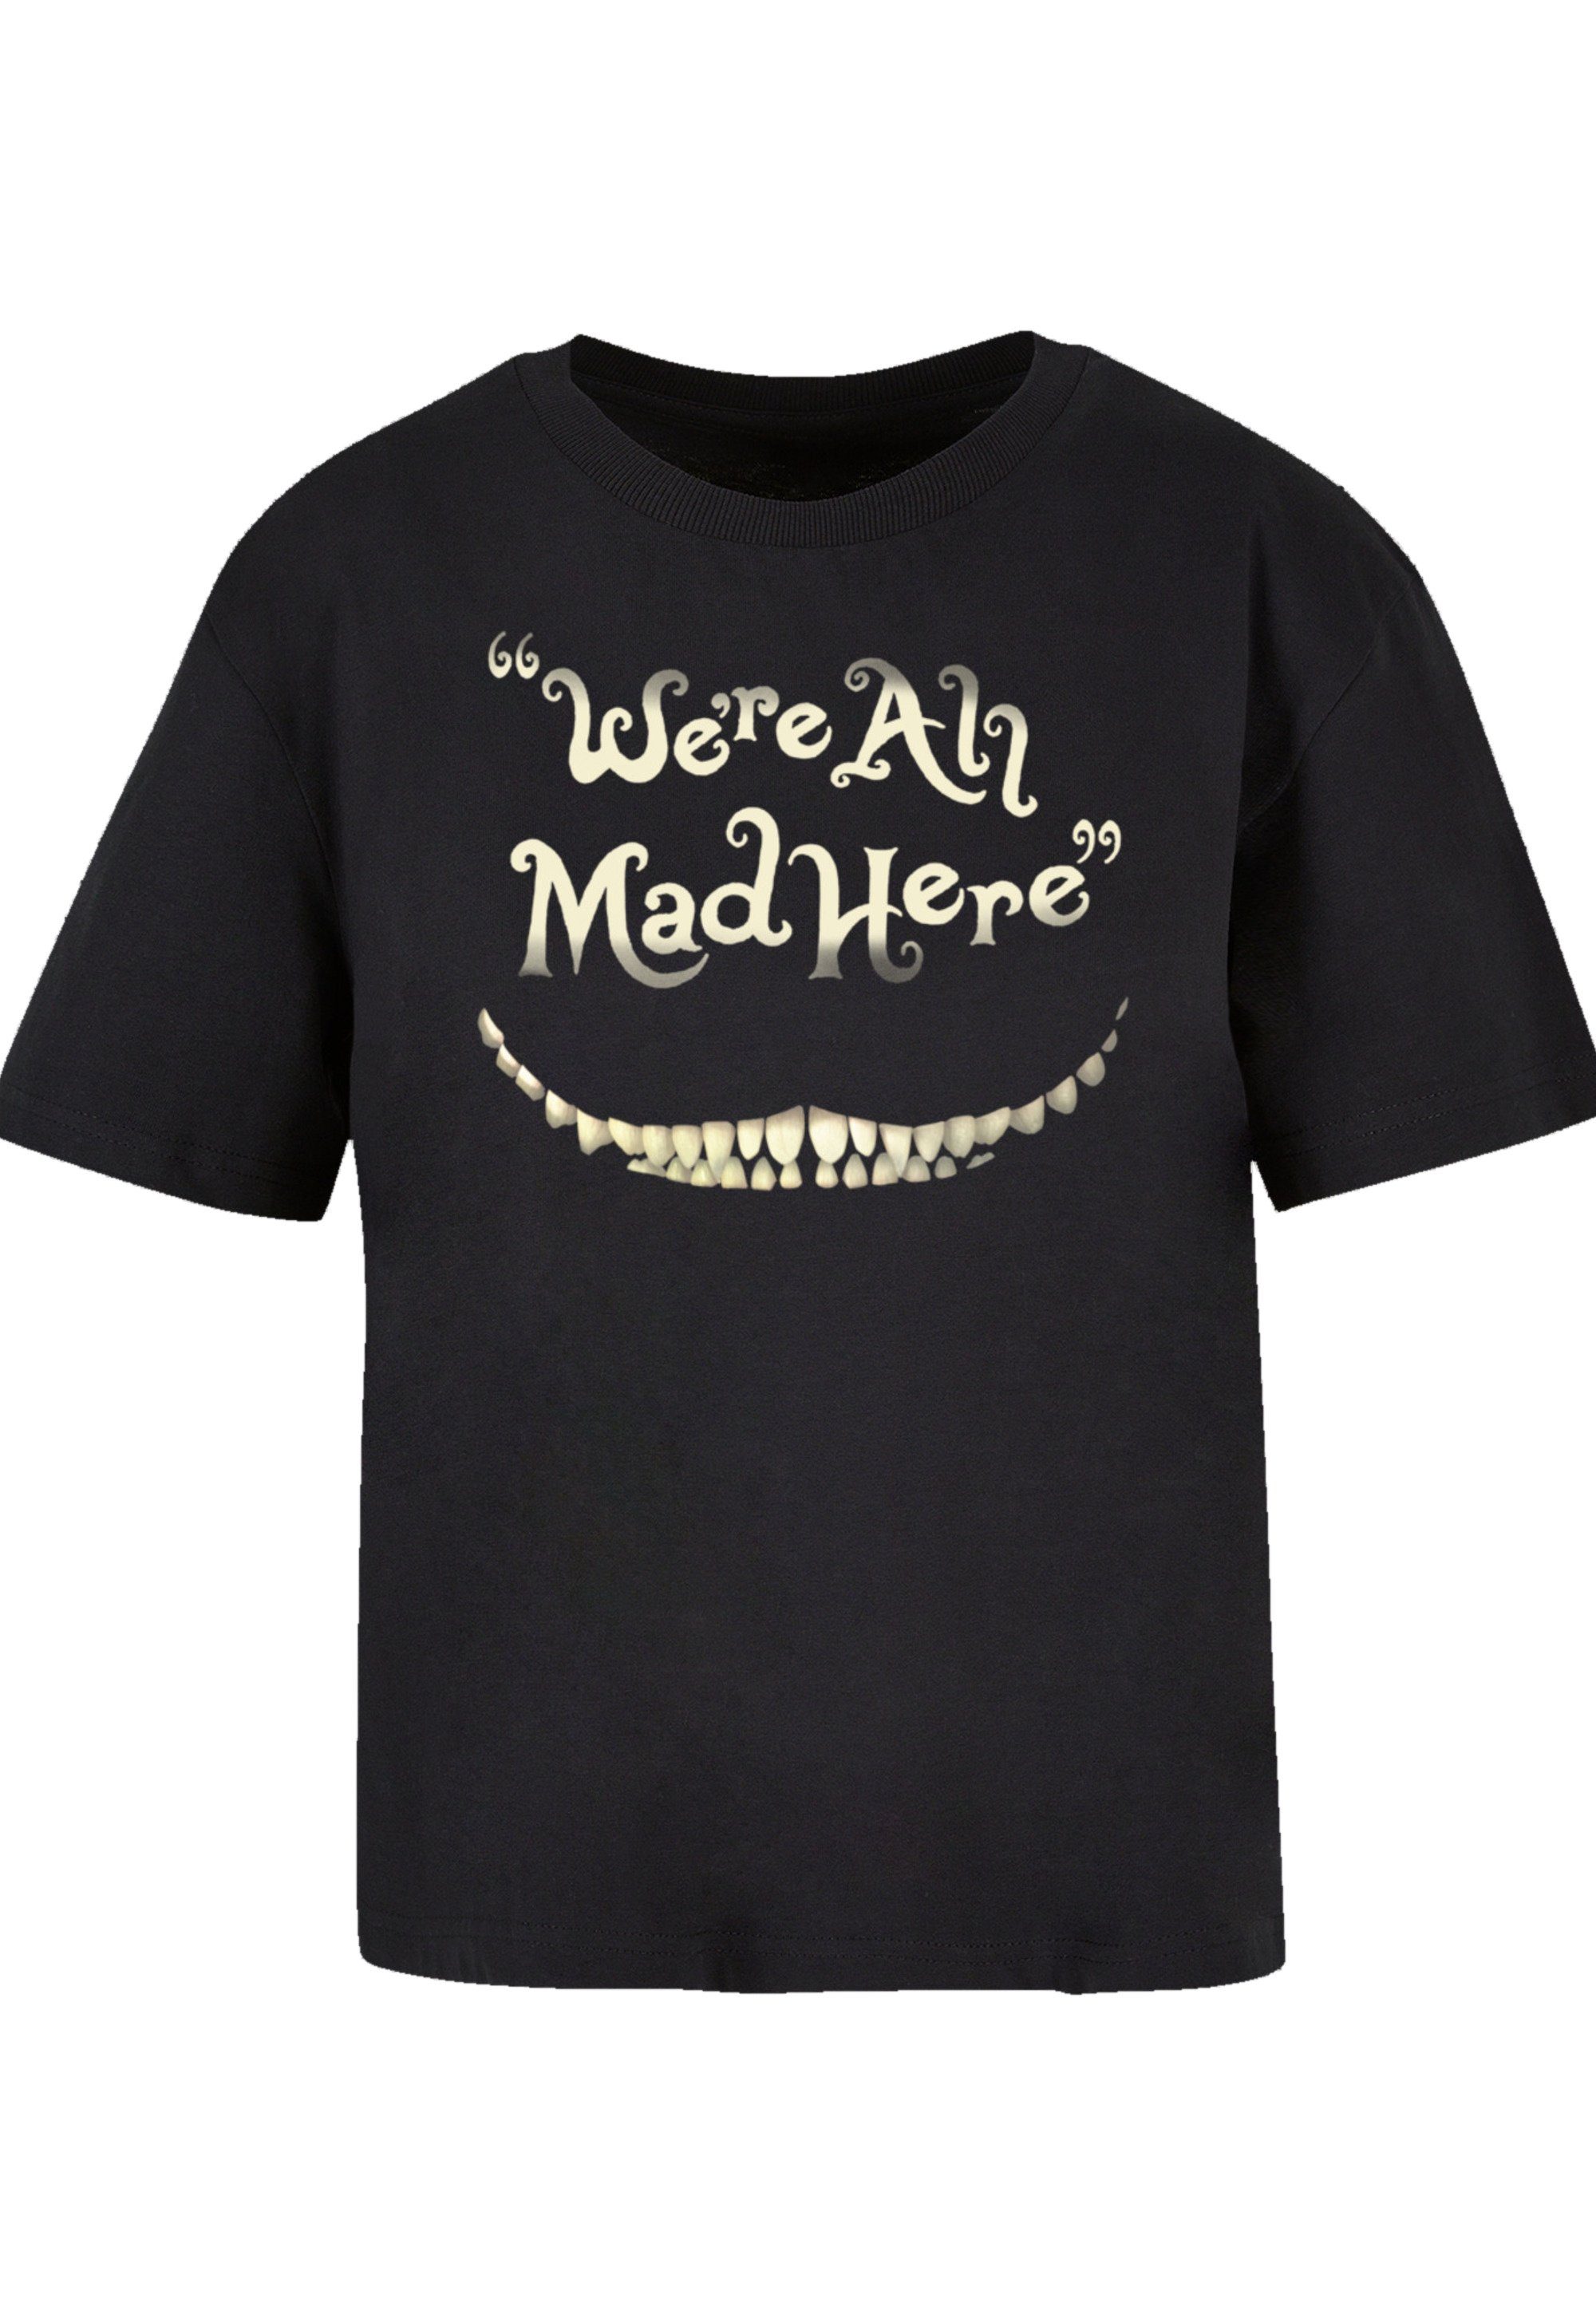 F4NT4STIC T-Shirt Premium Mad Disney Here Alice im Qualität Wunderland Smile